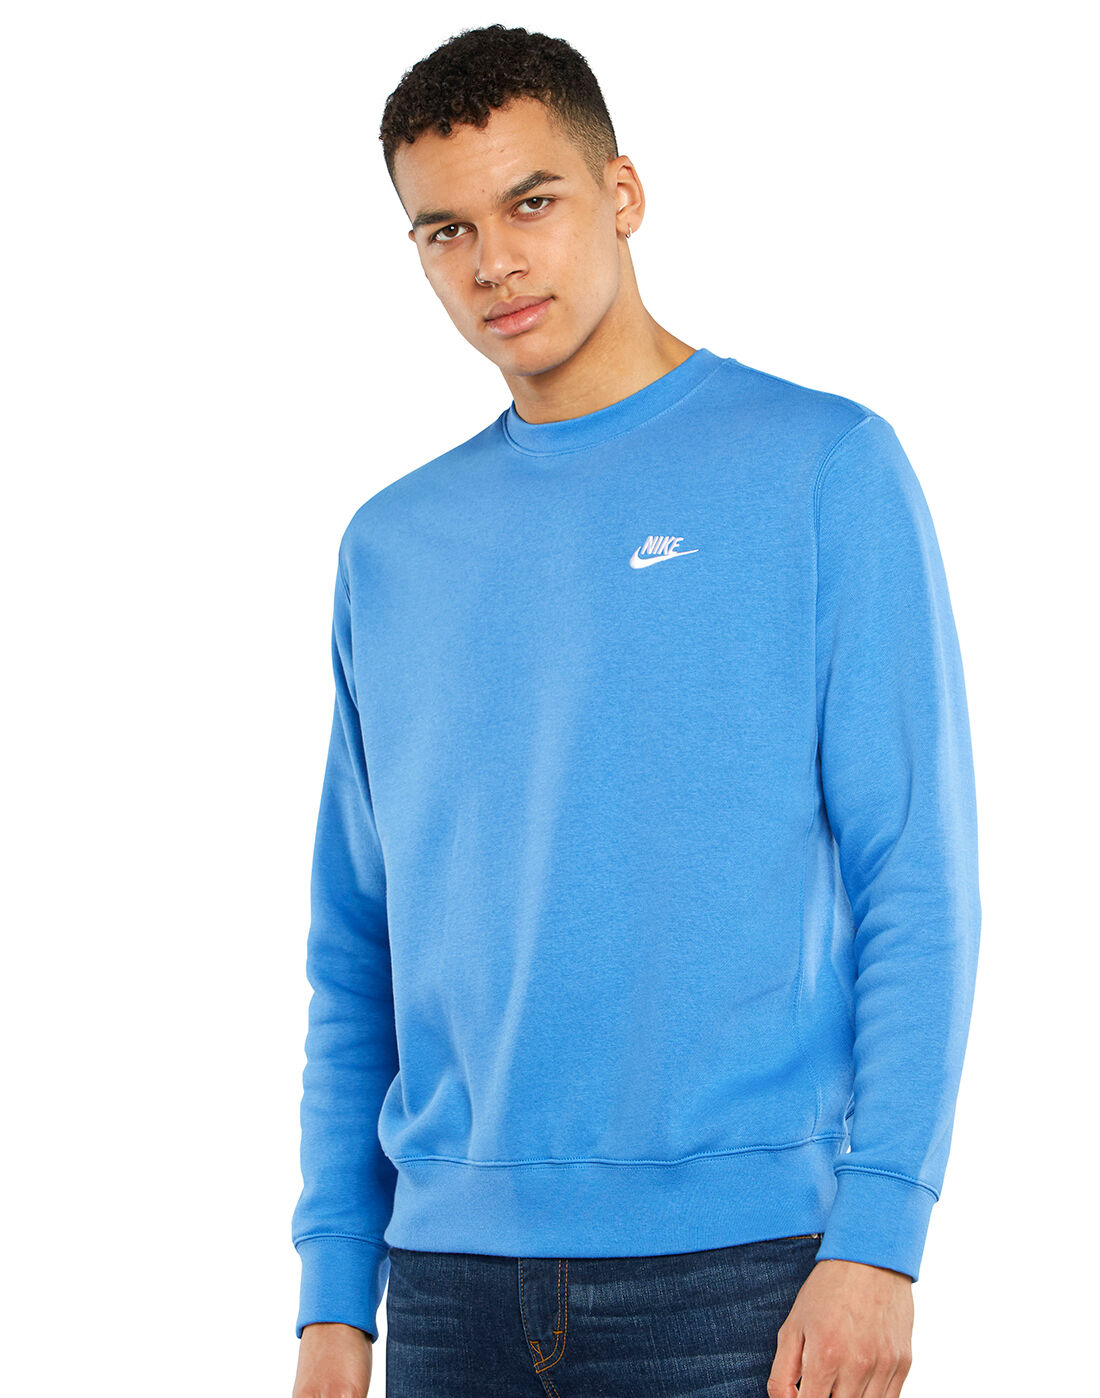 blue nike crewneck sweatshirt